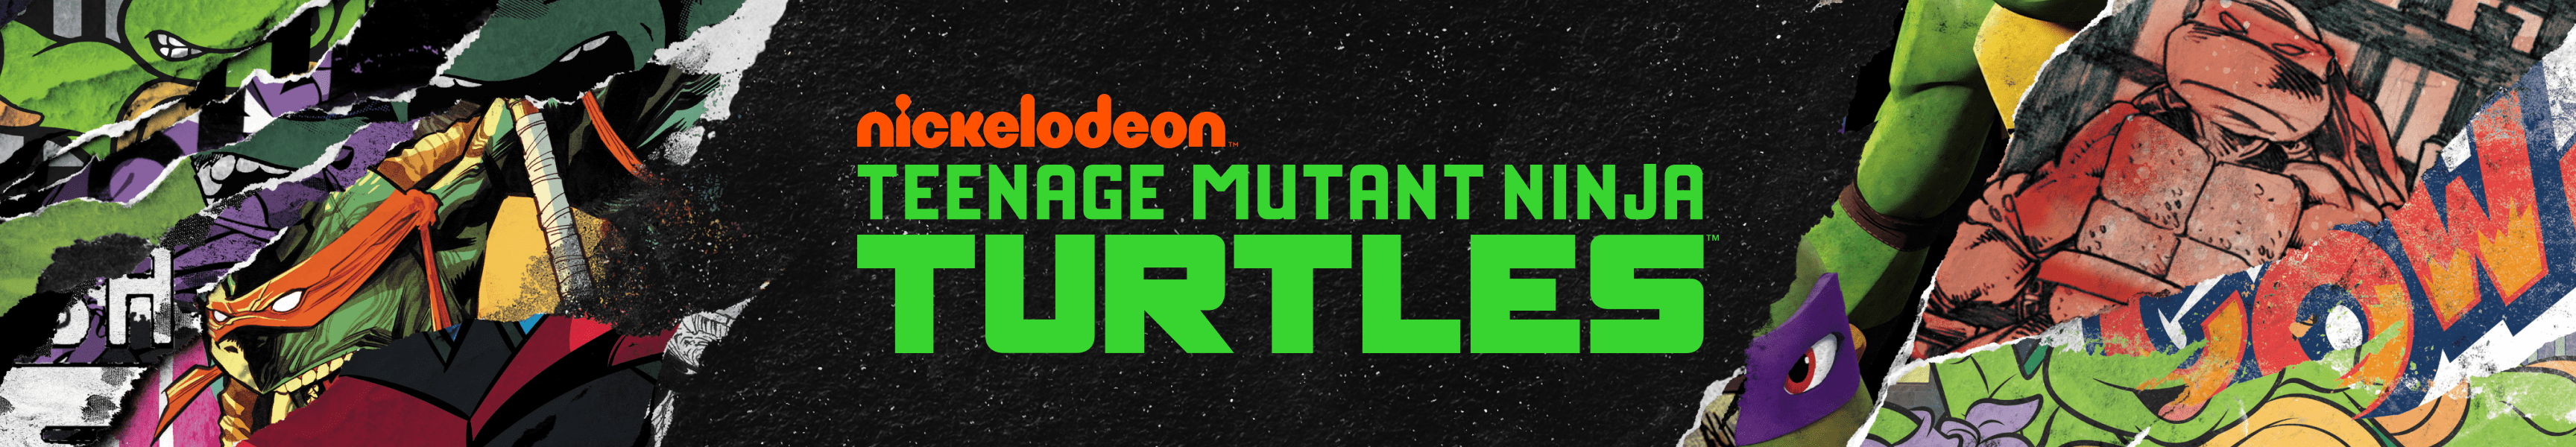 Teenage Mutant Ninja Turtles Video Game Artwork